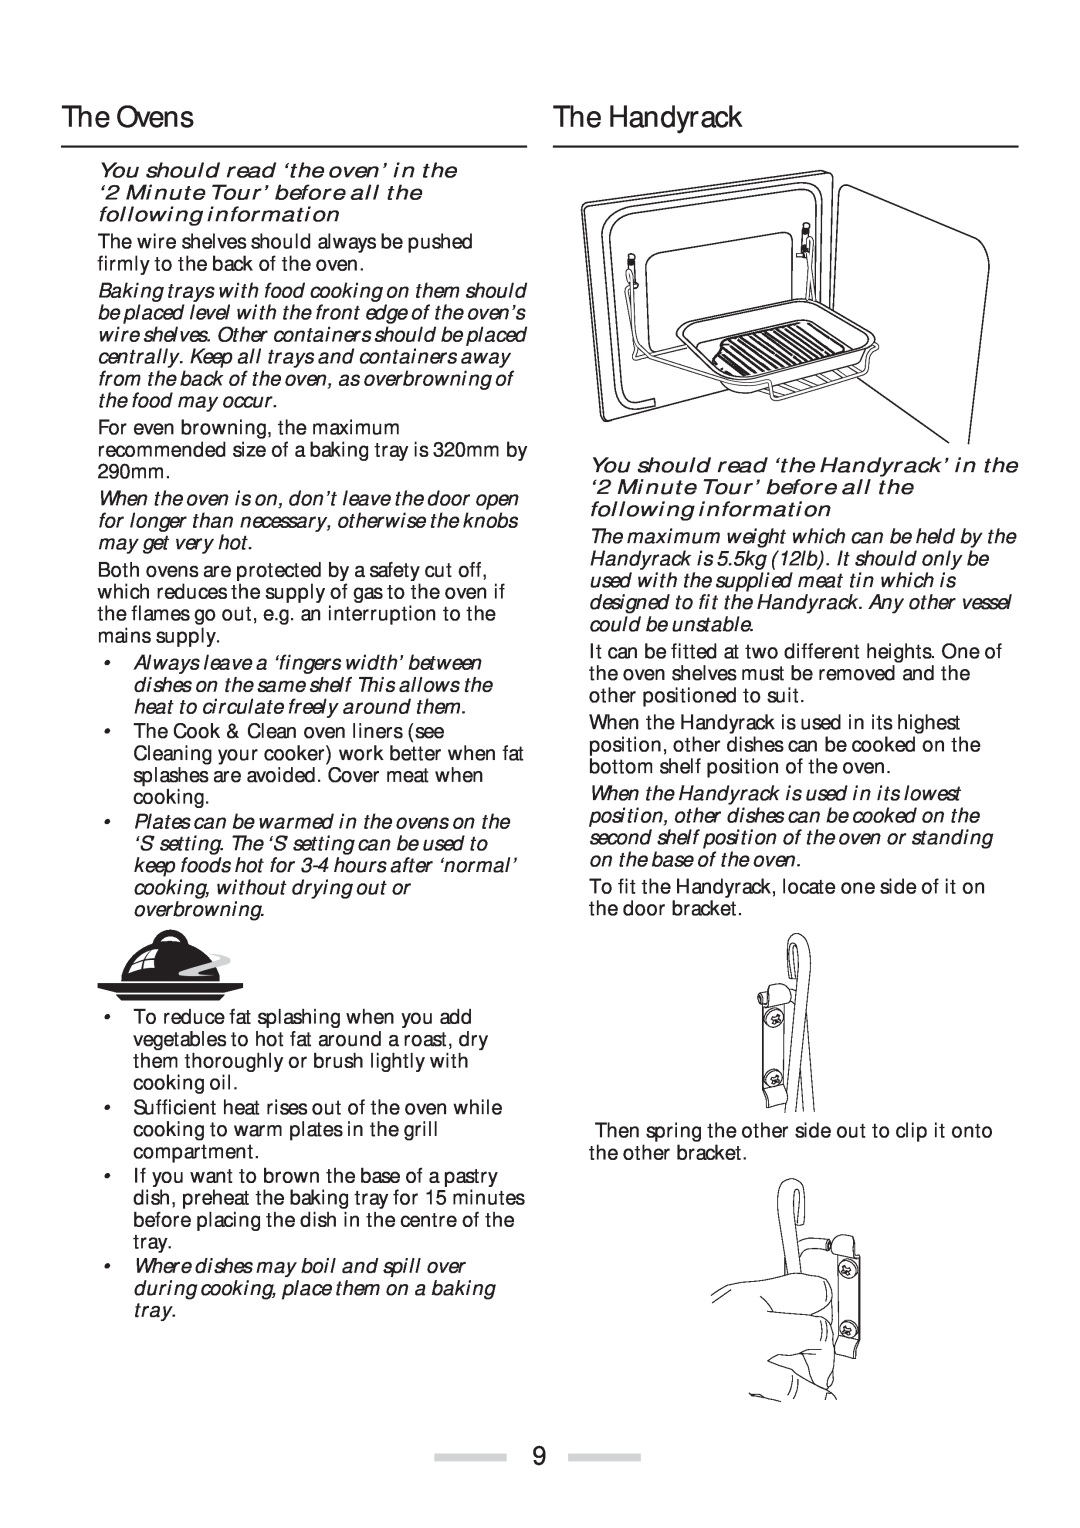 Rangemaster 110 installation instructions The Ovens, The Handyrack 